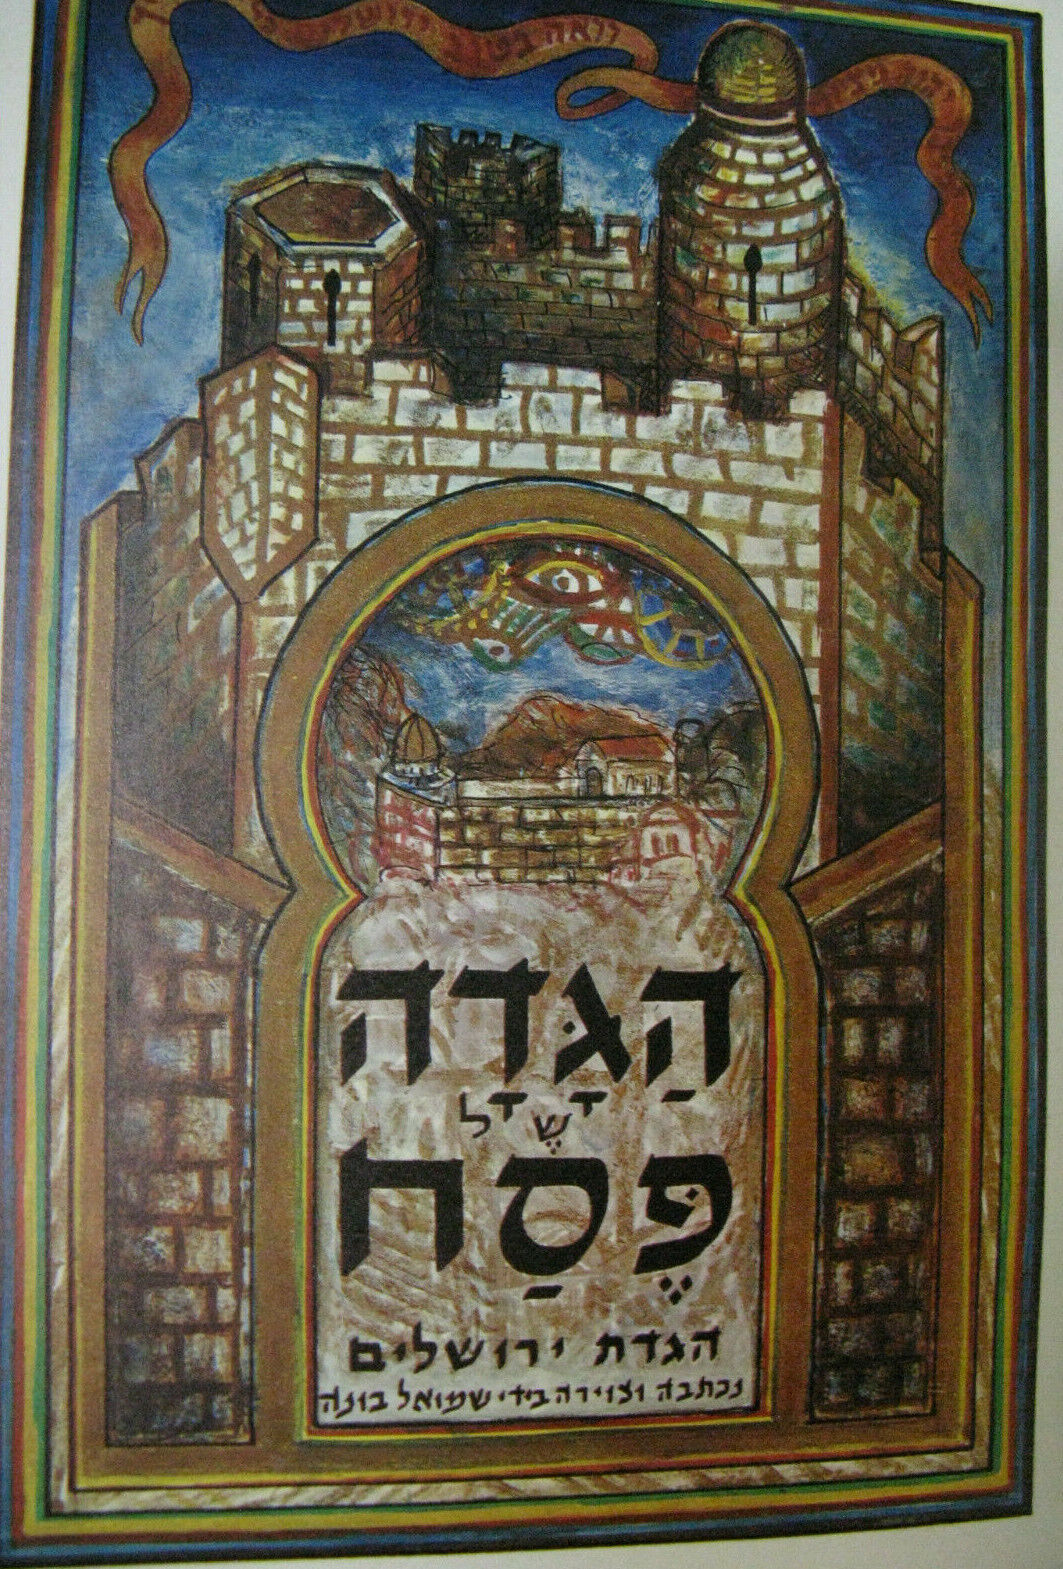 1968 Shmuel Bonneh Repletely Illustrated Colorful Modern Art Jerusalem Haggadah